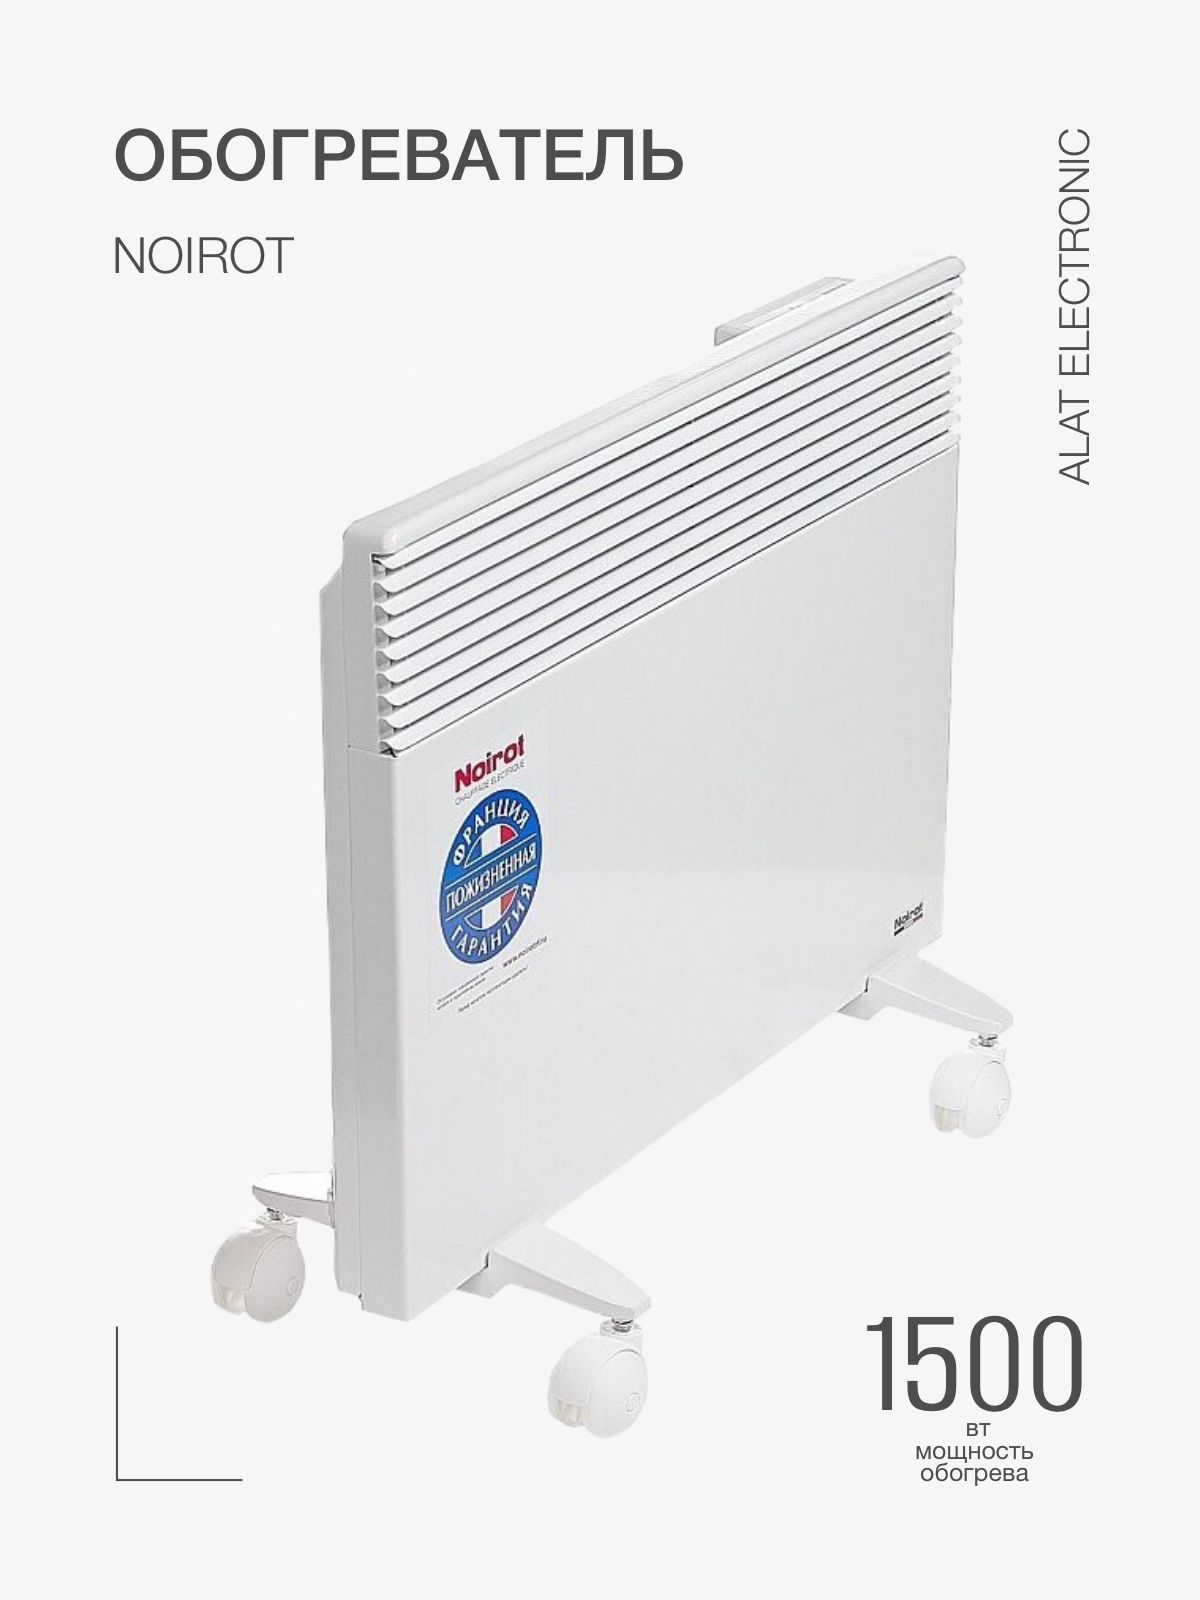 Noirot e 3 plus. Конвектор Noirot spot e-3 Plus 1000. Конвектор Noirot spot e-3 Plus 2000. Конвектор Noirot CNX-4 Plus 1500, белый. Noirot CNX-4 Plus 2000.